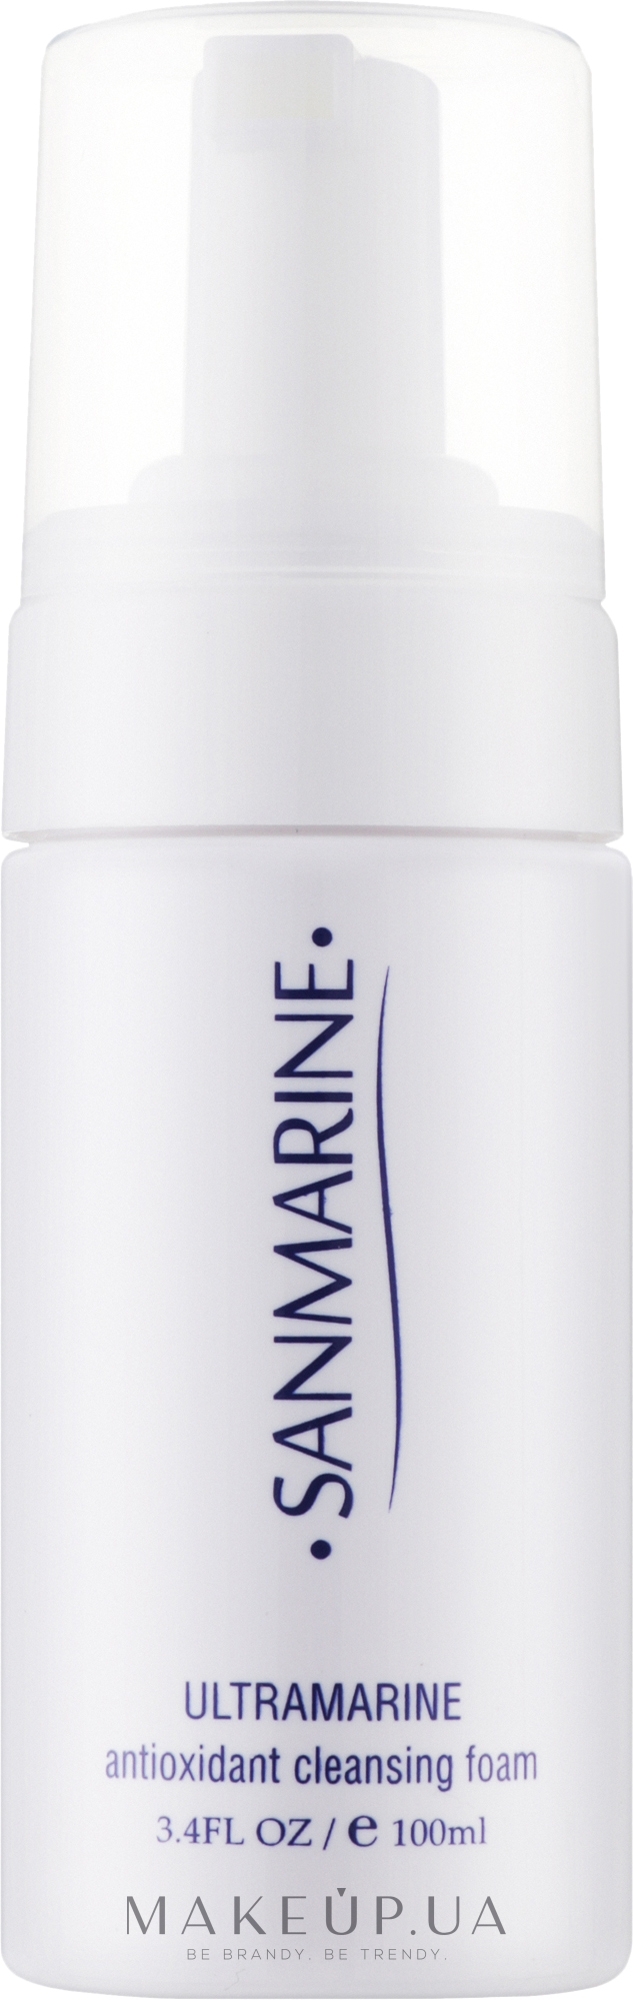 Антиоксидантна очищувальна пінка для обличчя - Sanmarine Ultramarine Antioxidant Cleansing Foam — фото 100ml